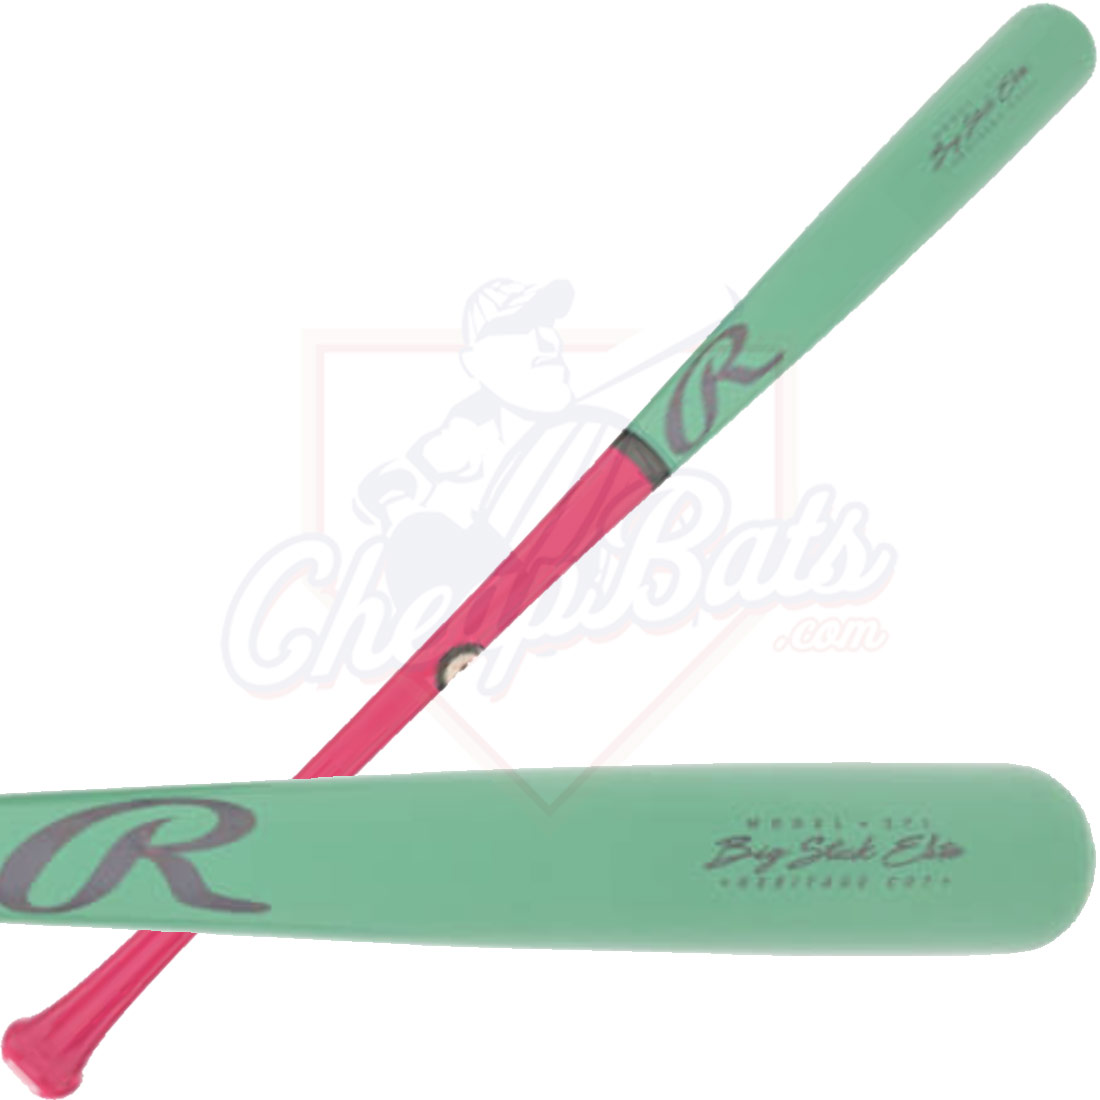 Rawlings Big Stick Elite 271 Maple Wood Baseball Bat RBSM271